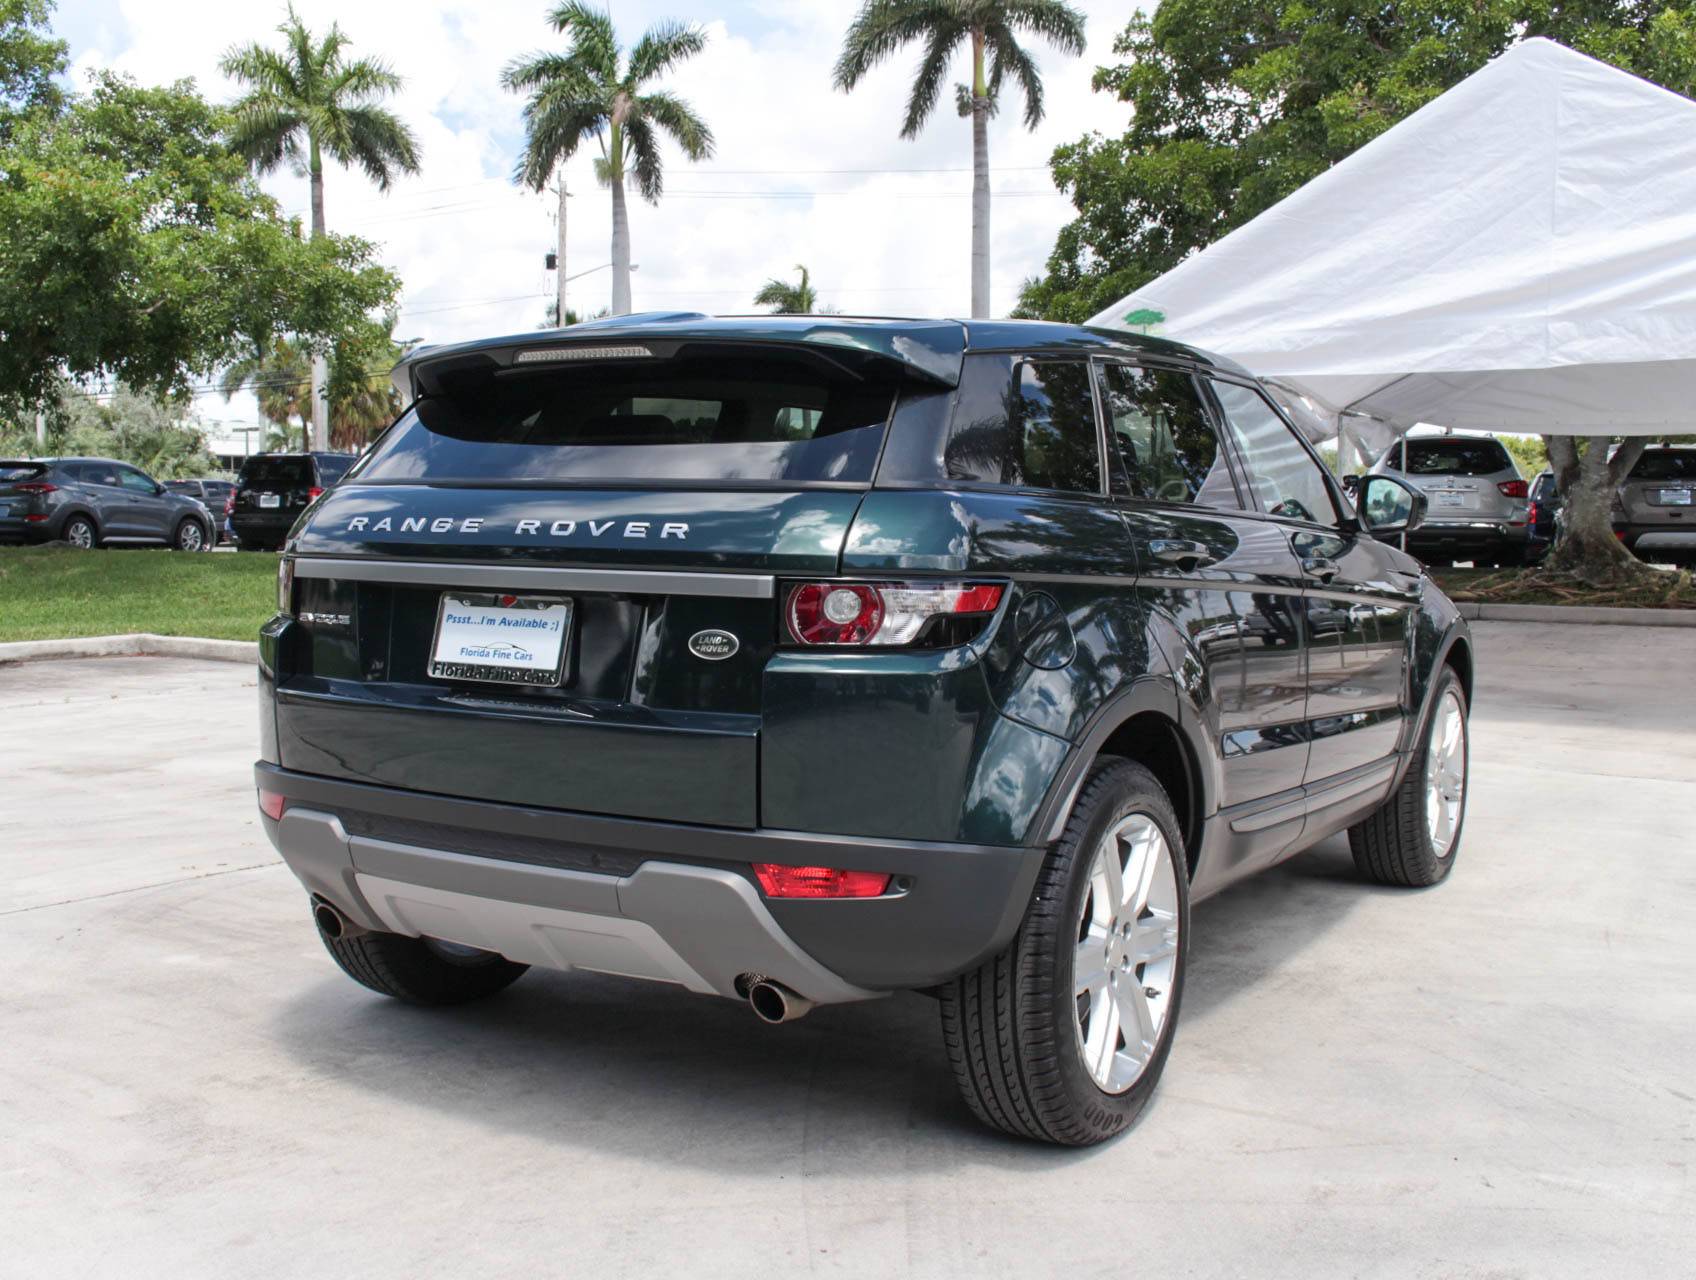 Florida Fine Cars - Used LAND ROVER RANGE ROVER EVOQUE 2015 WEST PALM PURE PLUS